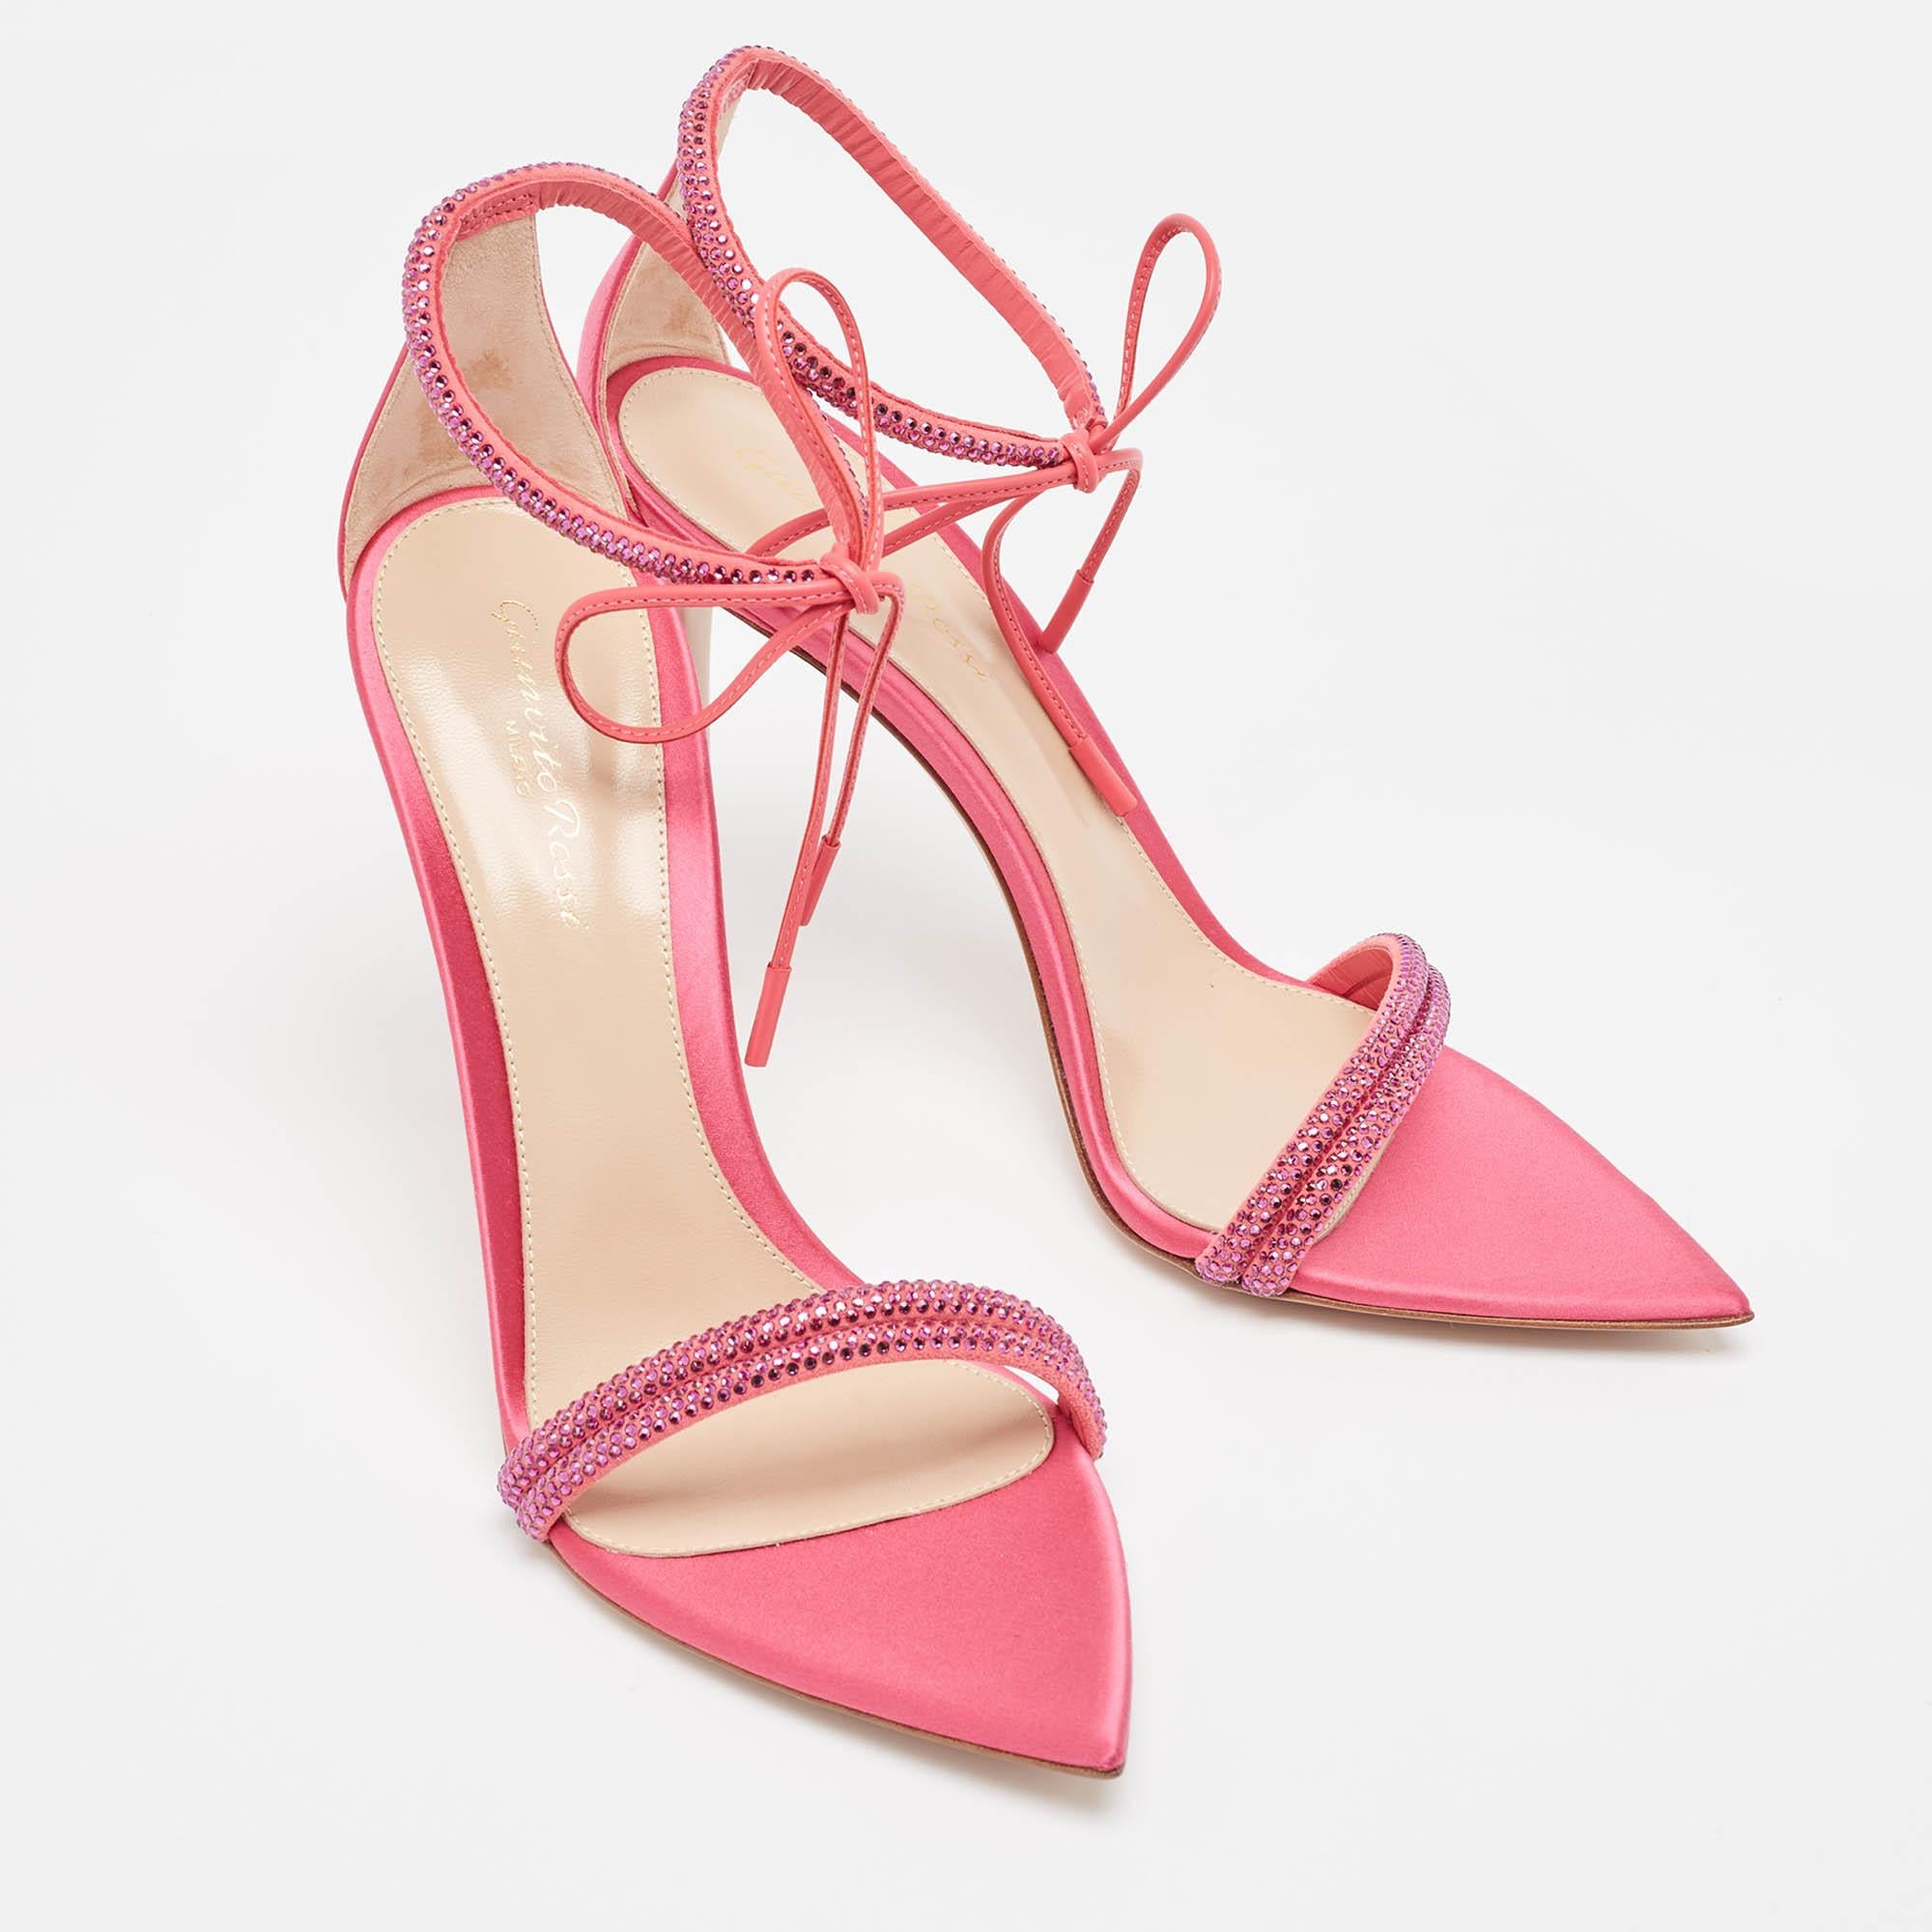 Gianvito Rossi Pink Satin Embellished Montecarlo Sandals Size 39 In New Condition For Sale In Dubai, Al Qouz 2